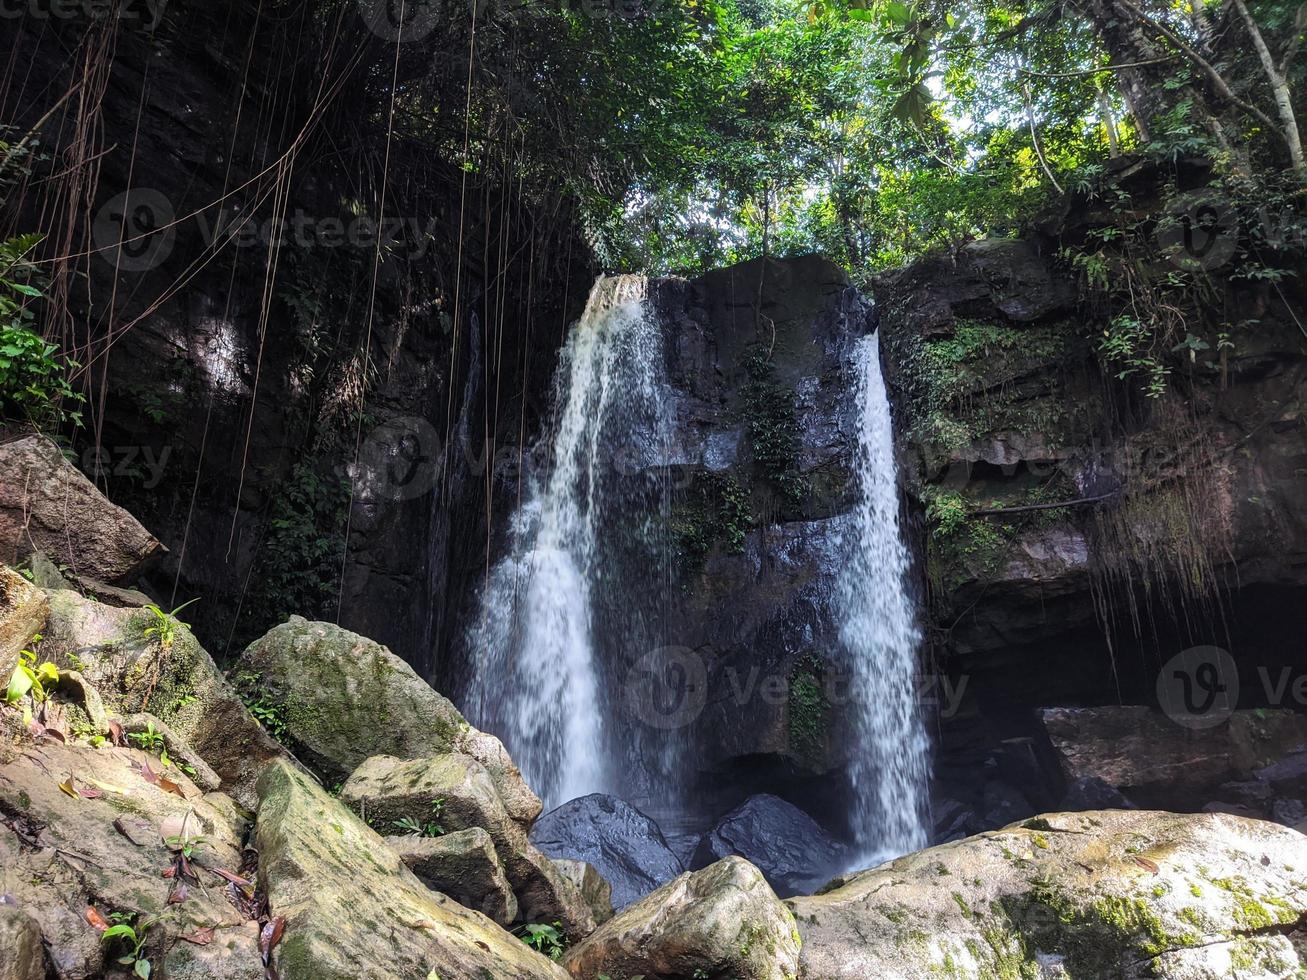 kotabangun vattenfallstur i djungeln i Kalimantan, Indonesien foto